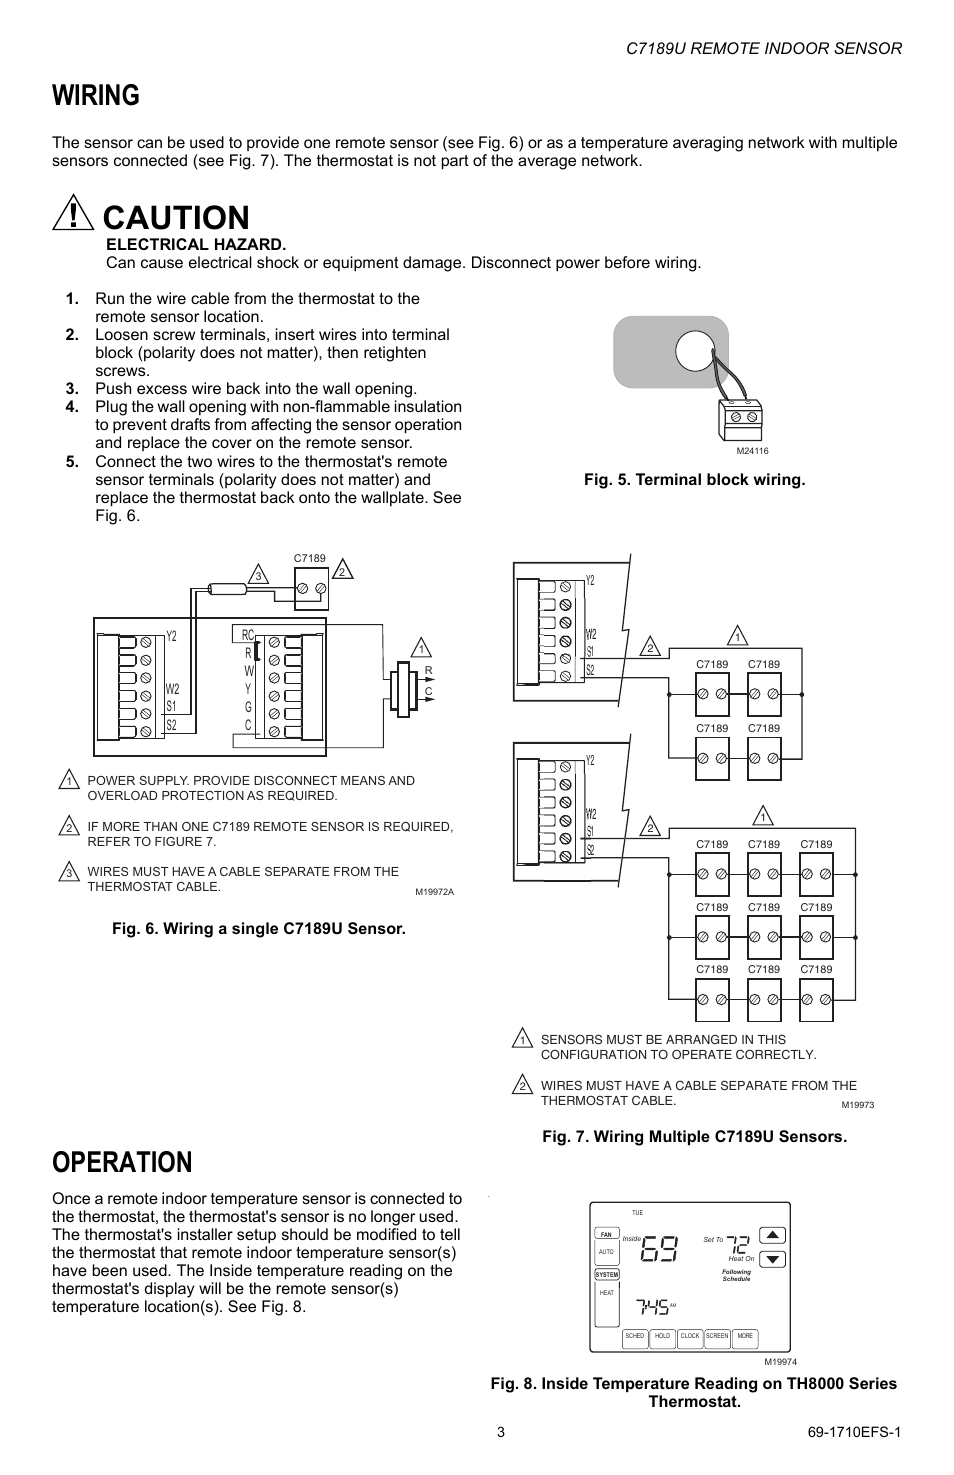 Caution, Wiring, Operation | Honeywell C7189U User Manual | Page 3 / 12